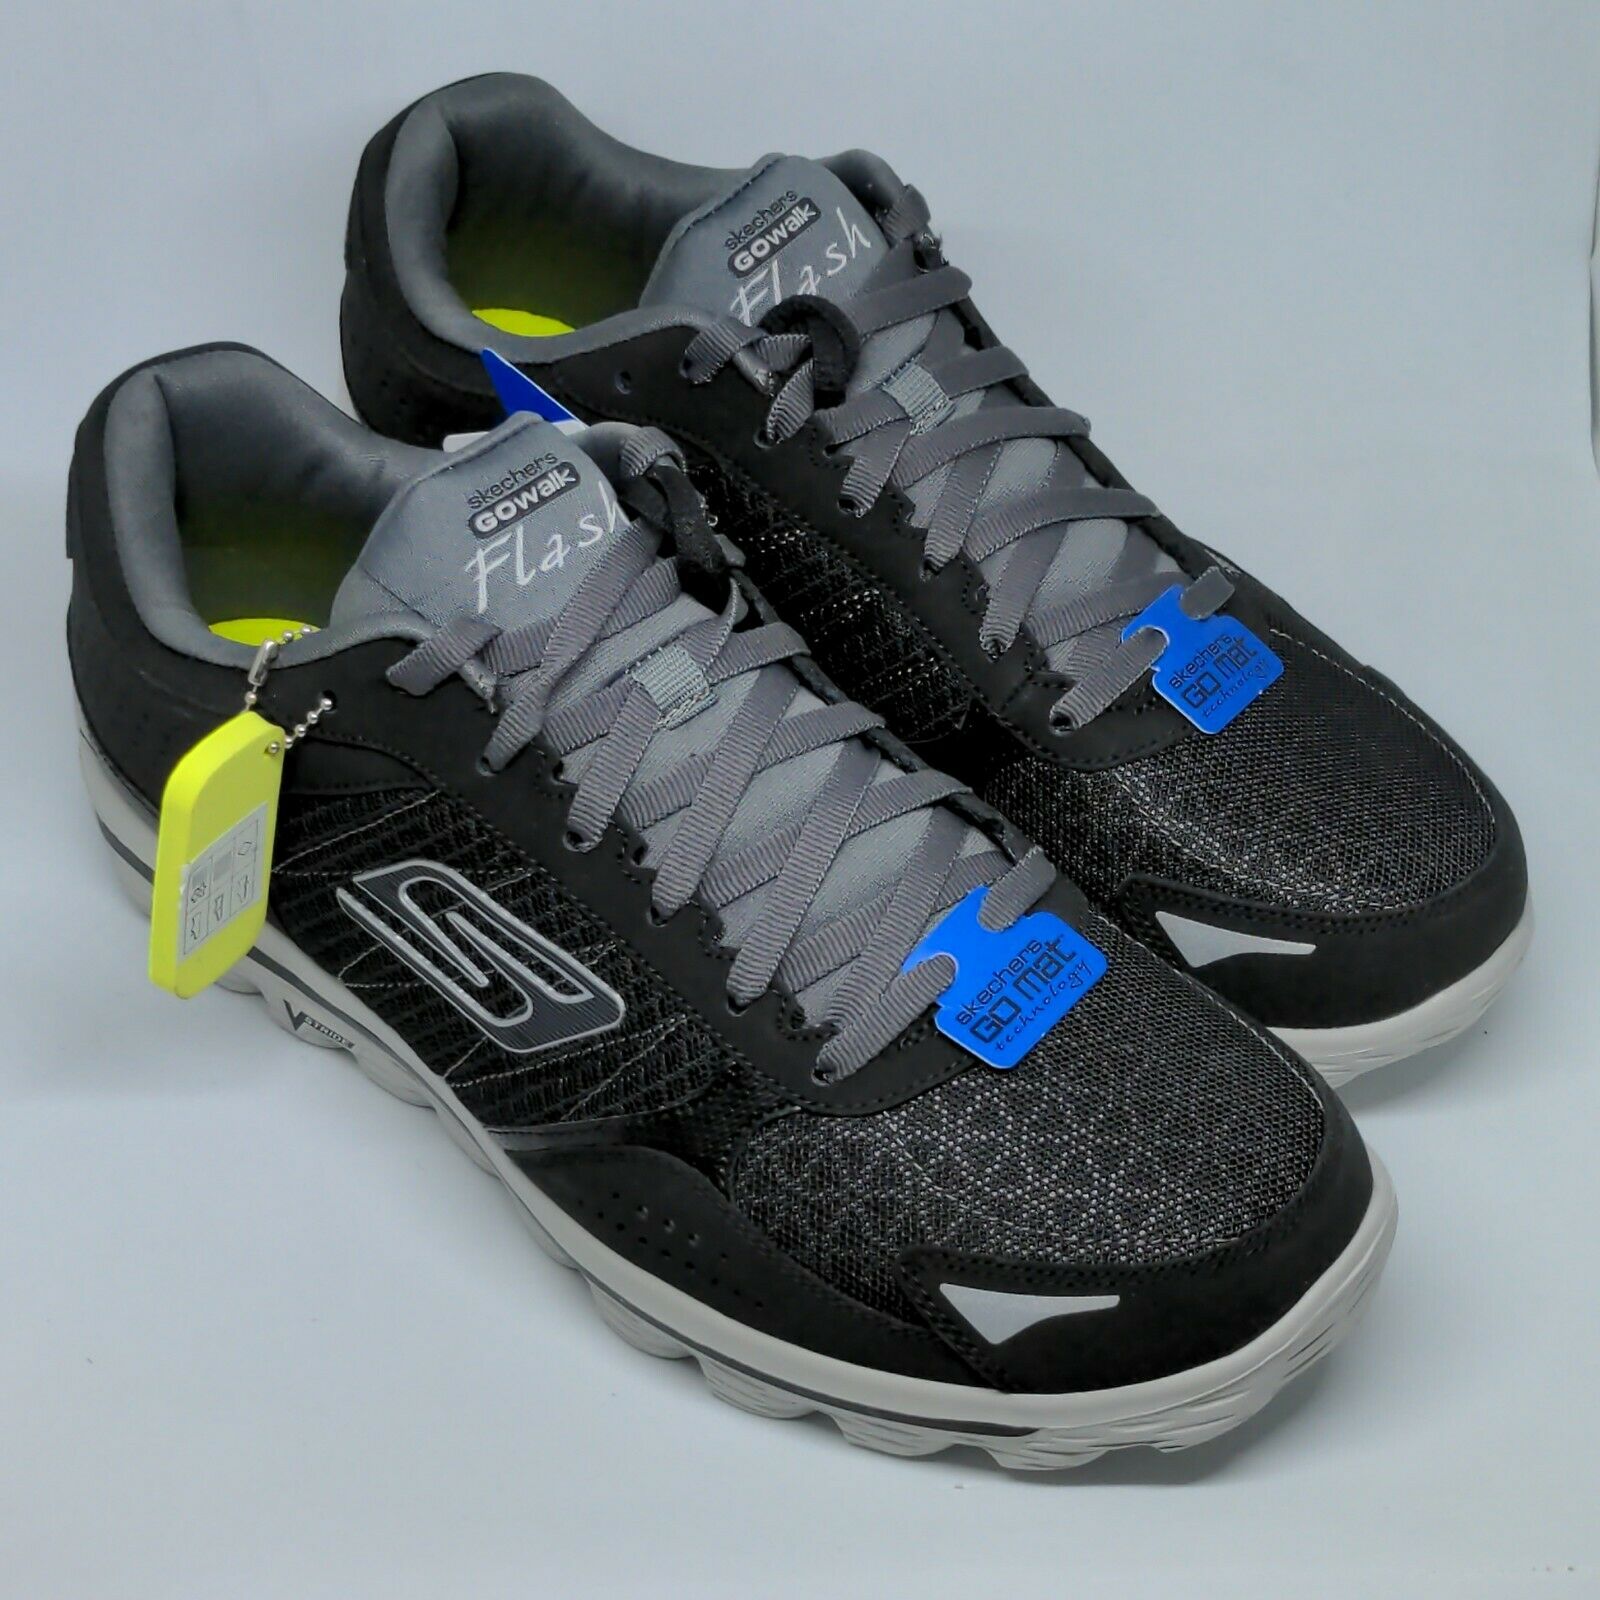 Men's Skechers GOwalk 2 Flash Walking Shoes Black/Gray Size 11 53960